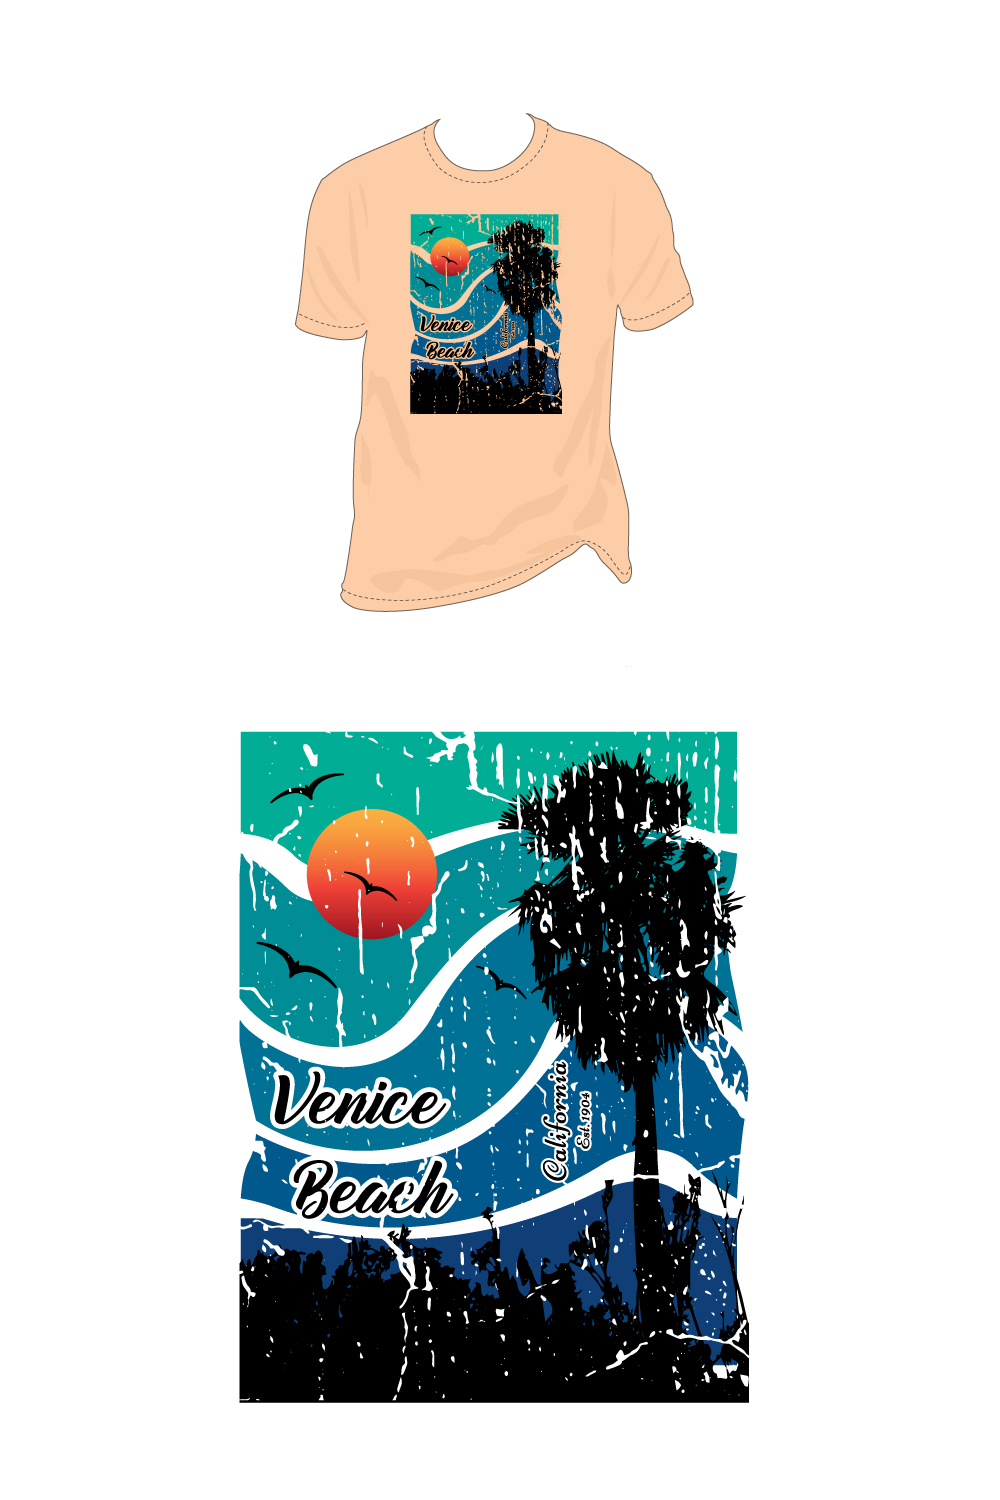 Venice beach, California, surfing boat, palm tree shirt design, print design, summer fashion grunge effect, pinterest preview image.